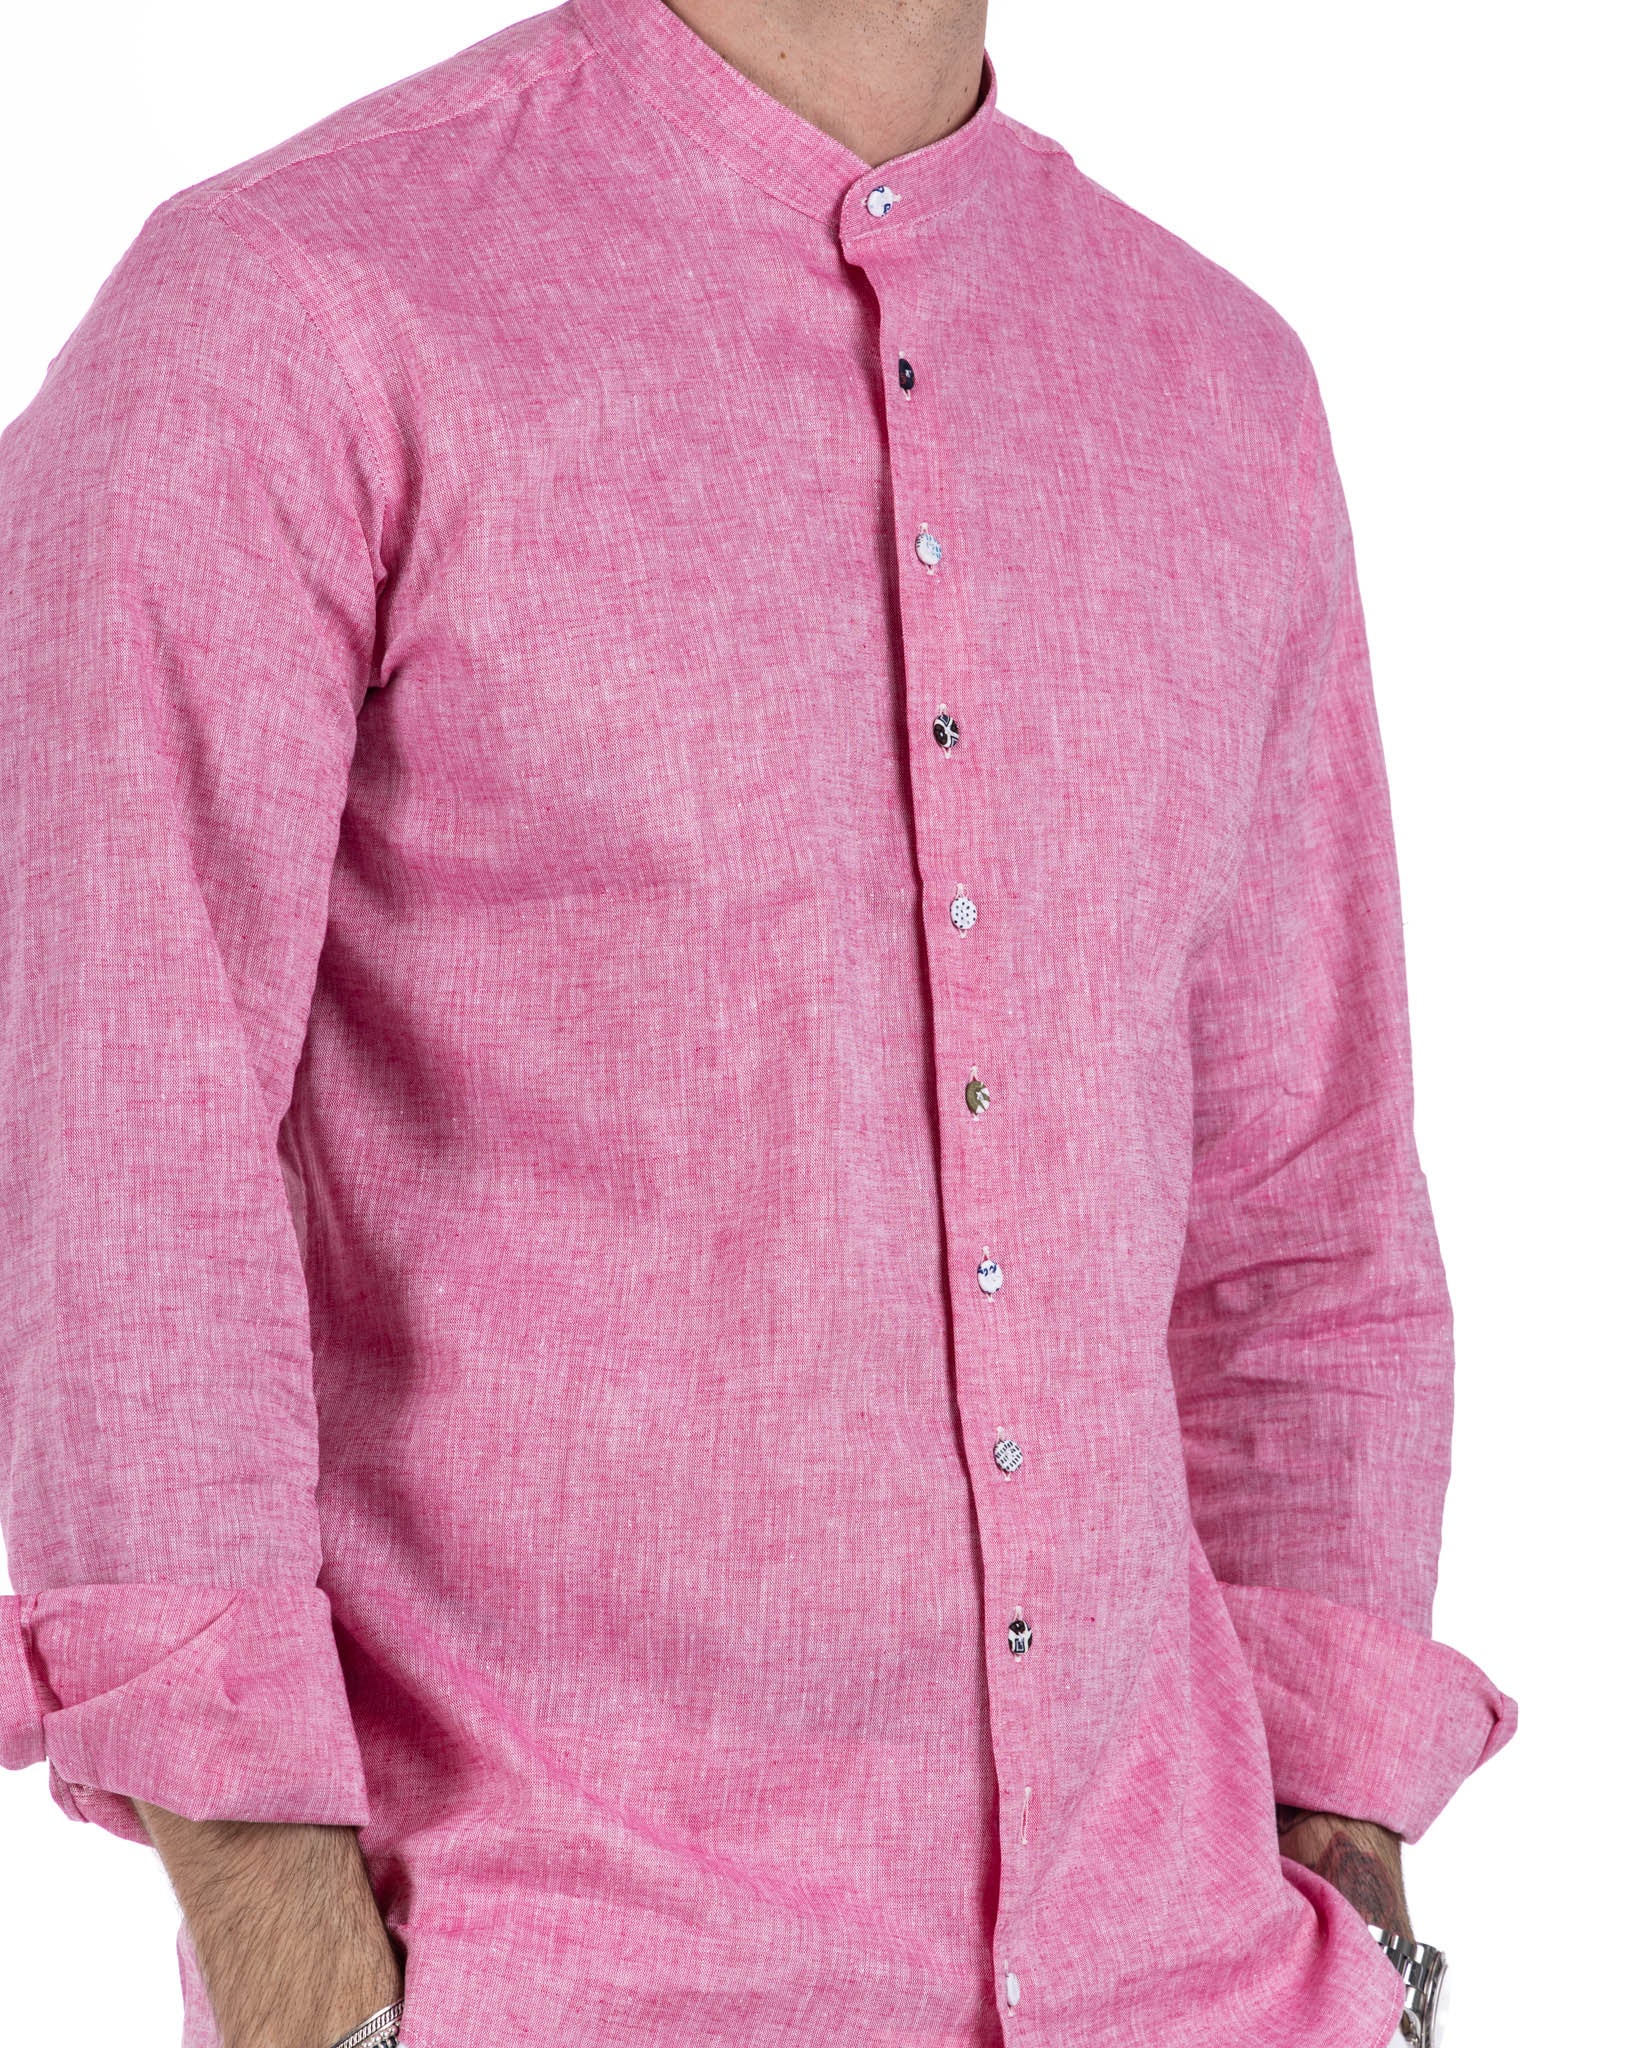 Positano - fuchsia linen Korean shirt